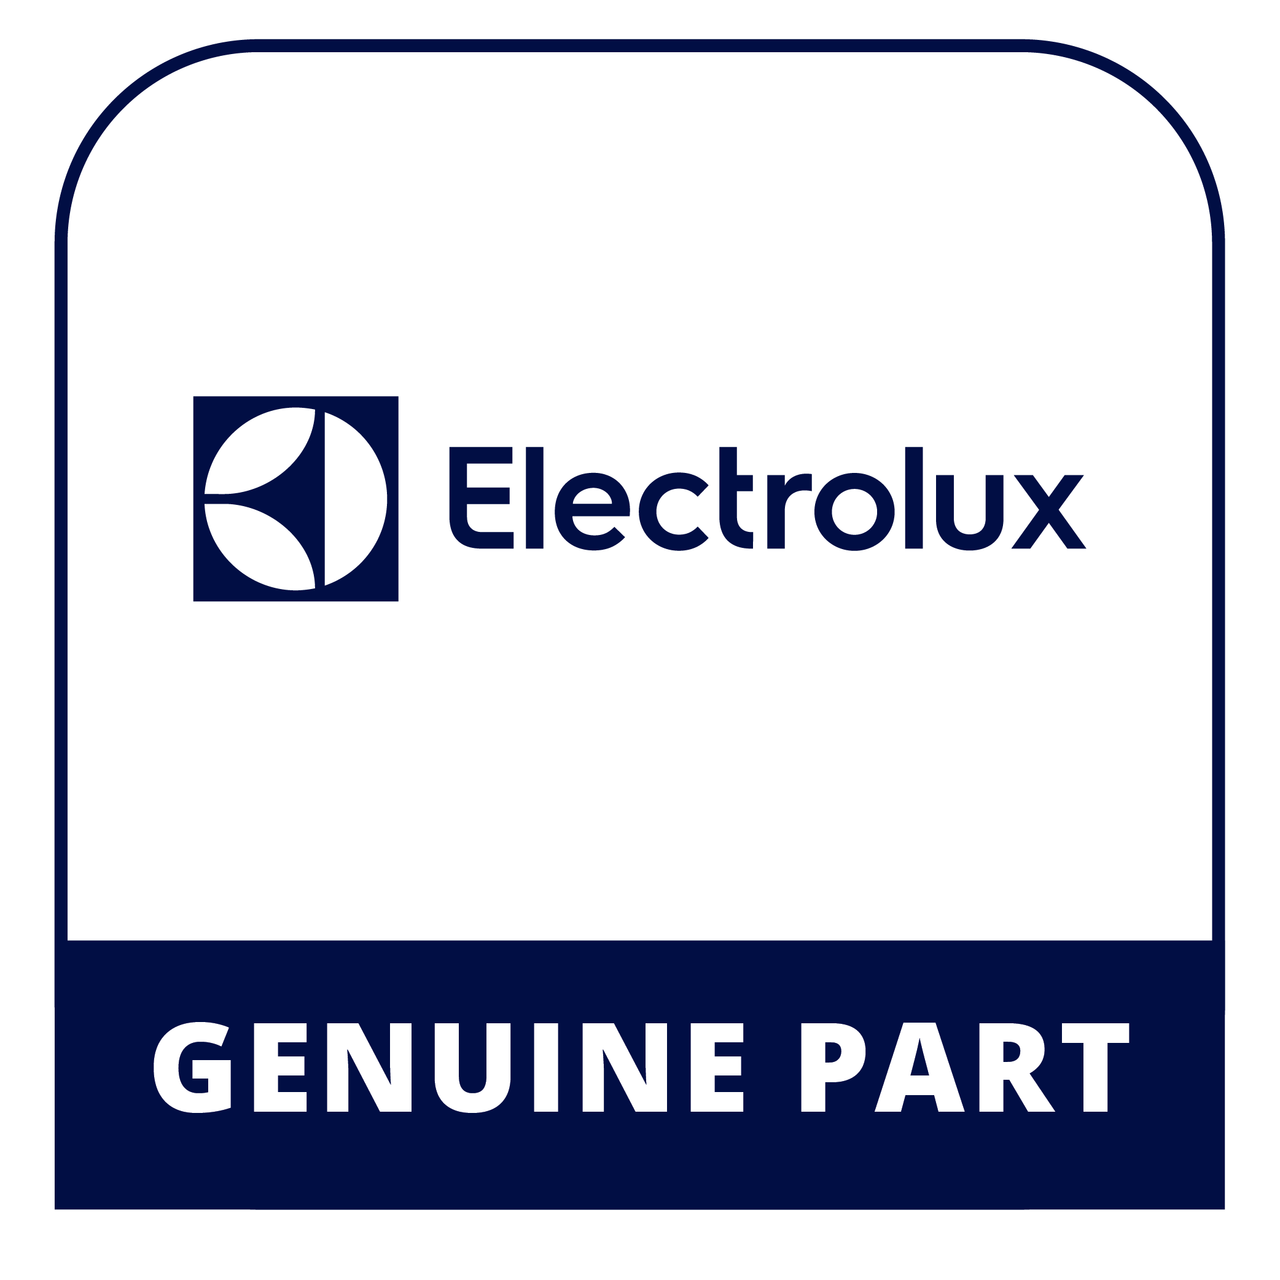 Frigidaire - Electrolux 5304497260 Insert For 6 Fm Ch - Genuine Electrolux Part